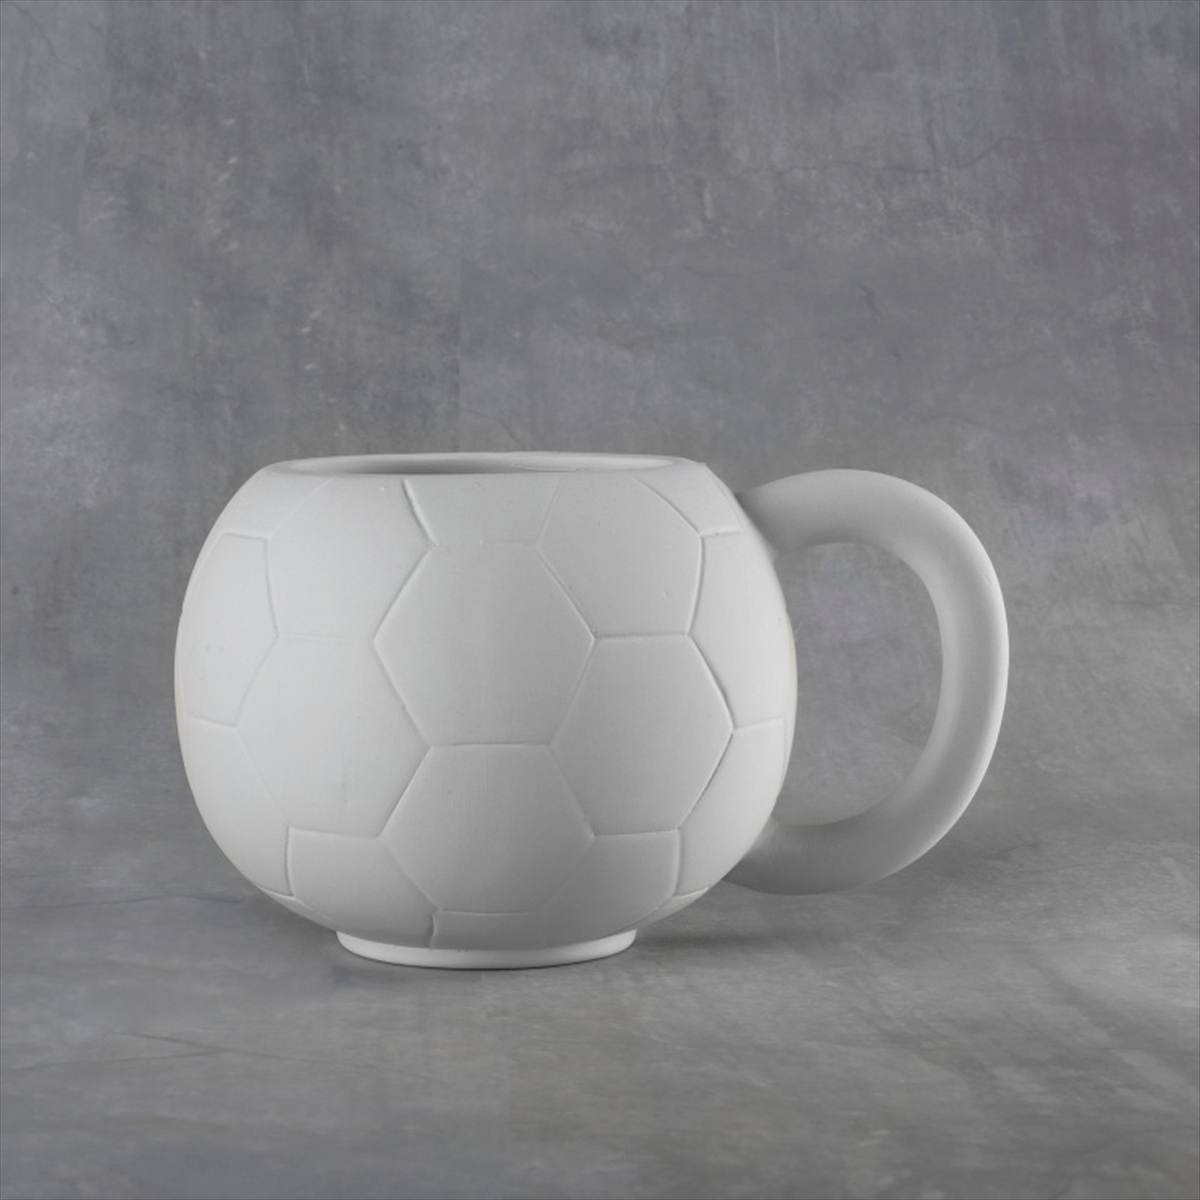 Duncan 38095 Bisque Soccer Ball Mug 20 oz